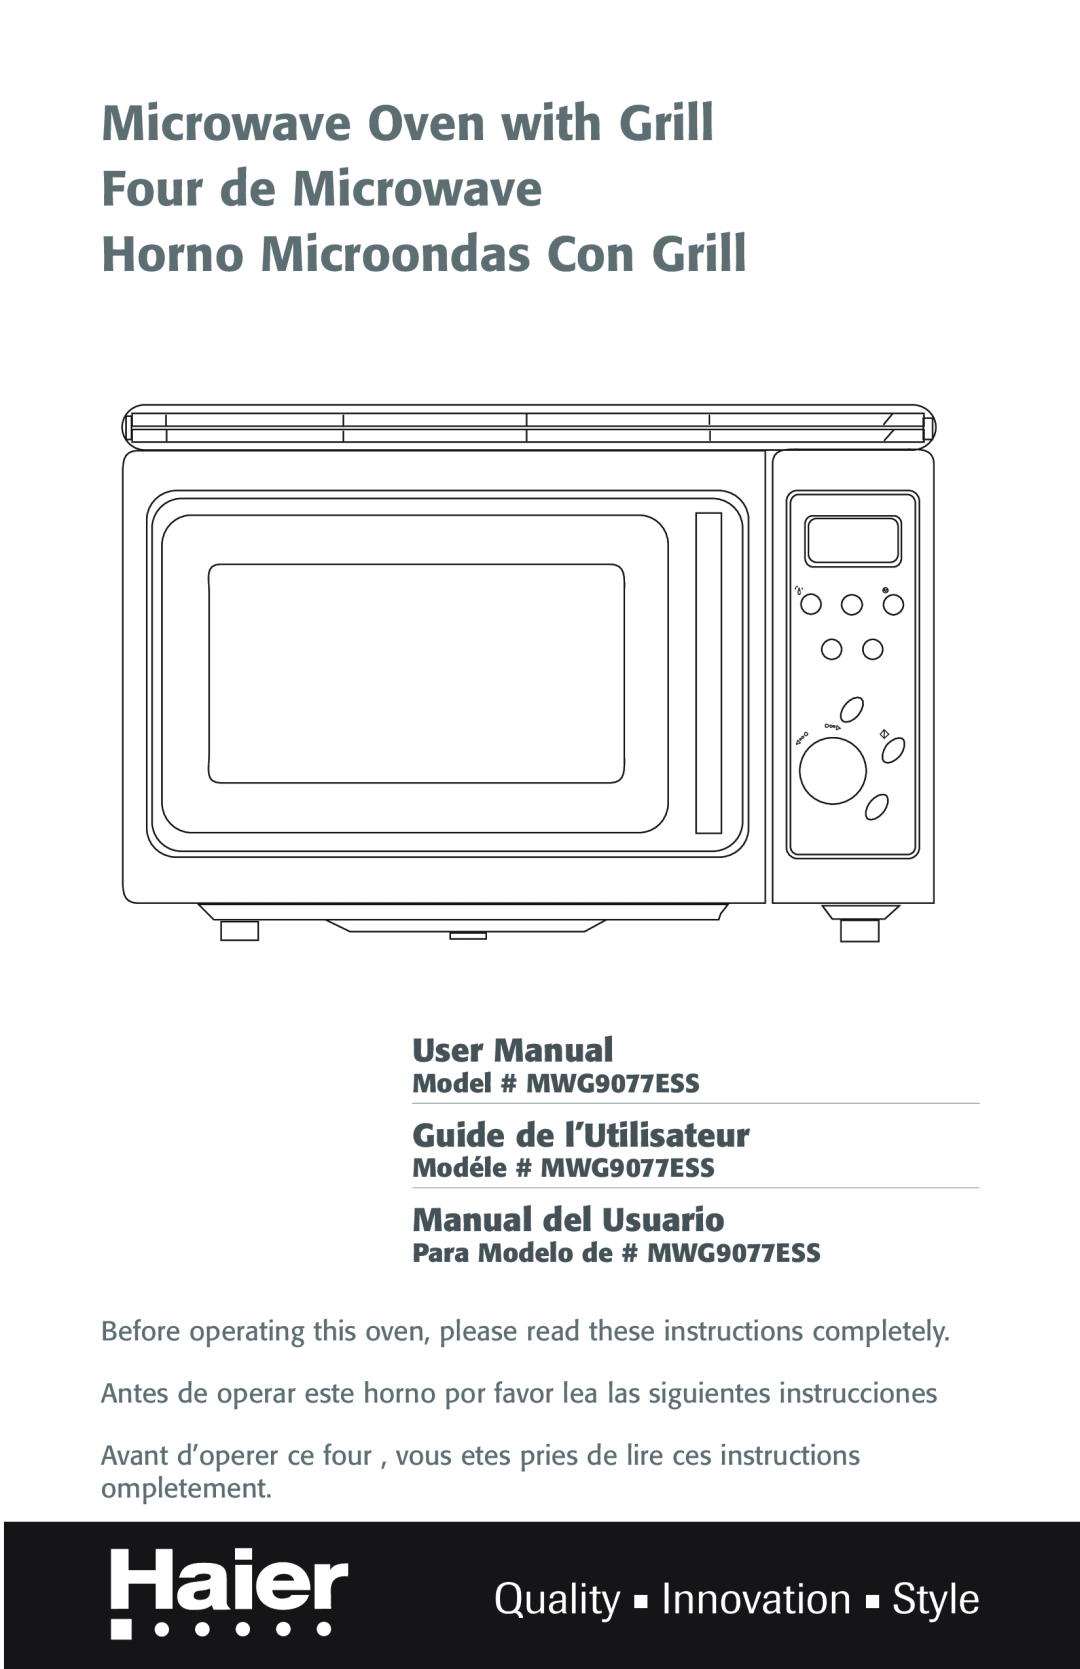 Haier user manual Quality Innovation Style, Guide de l’Utilisateur, Manual del Usuario, Model # MWG9077ESS 